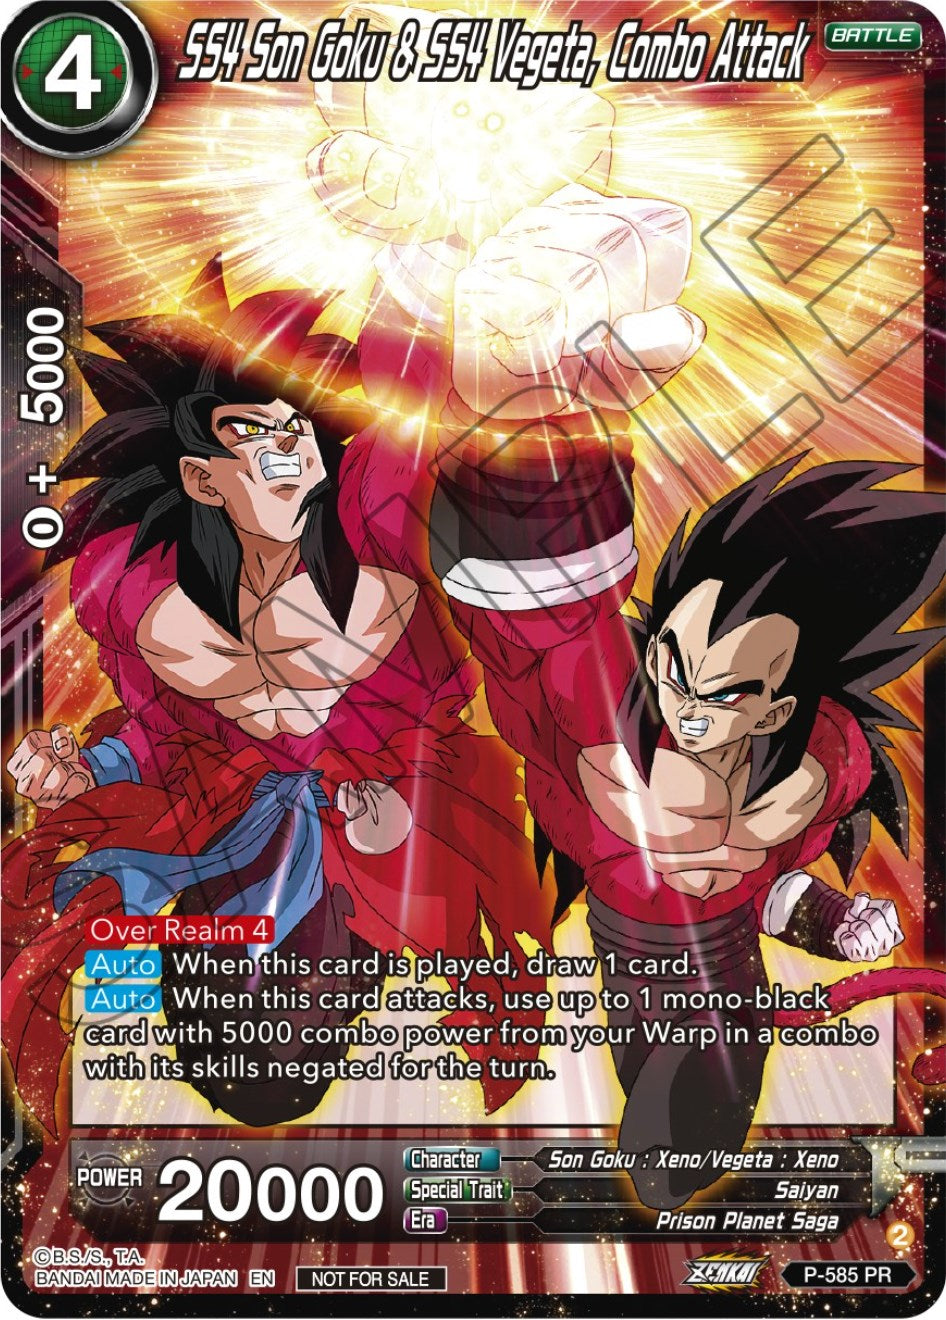 SS4 Son Goku & SS4 Vegeta, Combo Attack (Zenkai Series Tournament Pack Vol.7) (P-585) [Tournament Promotion Cards] | Mindsight Gaming